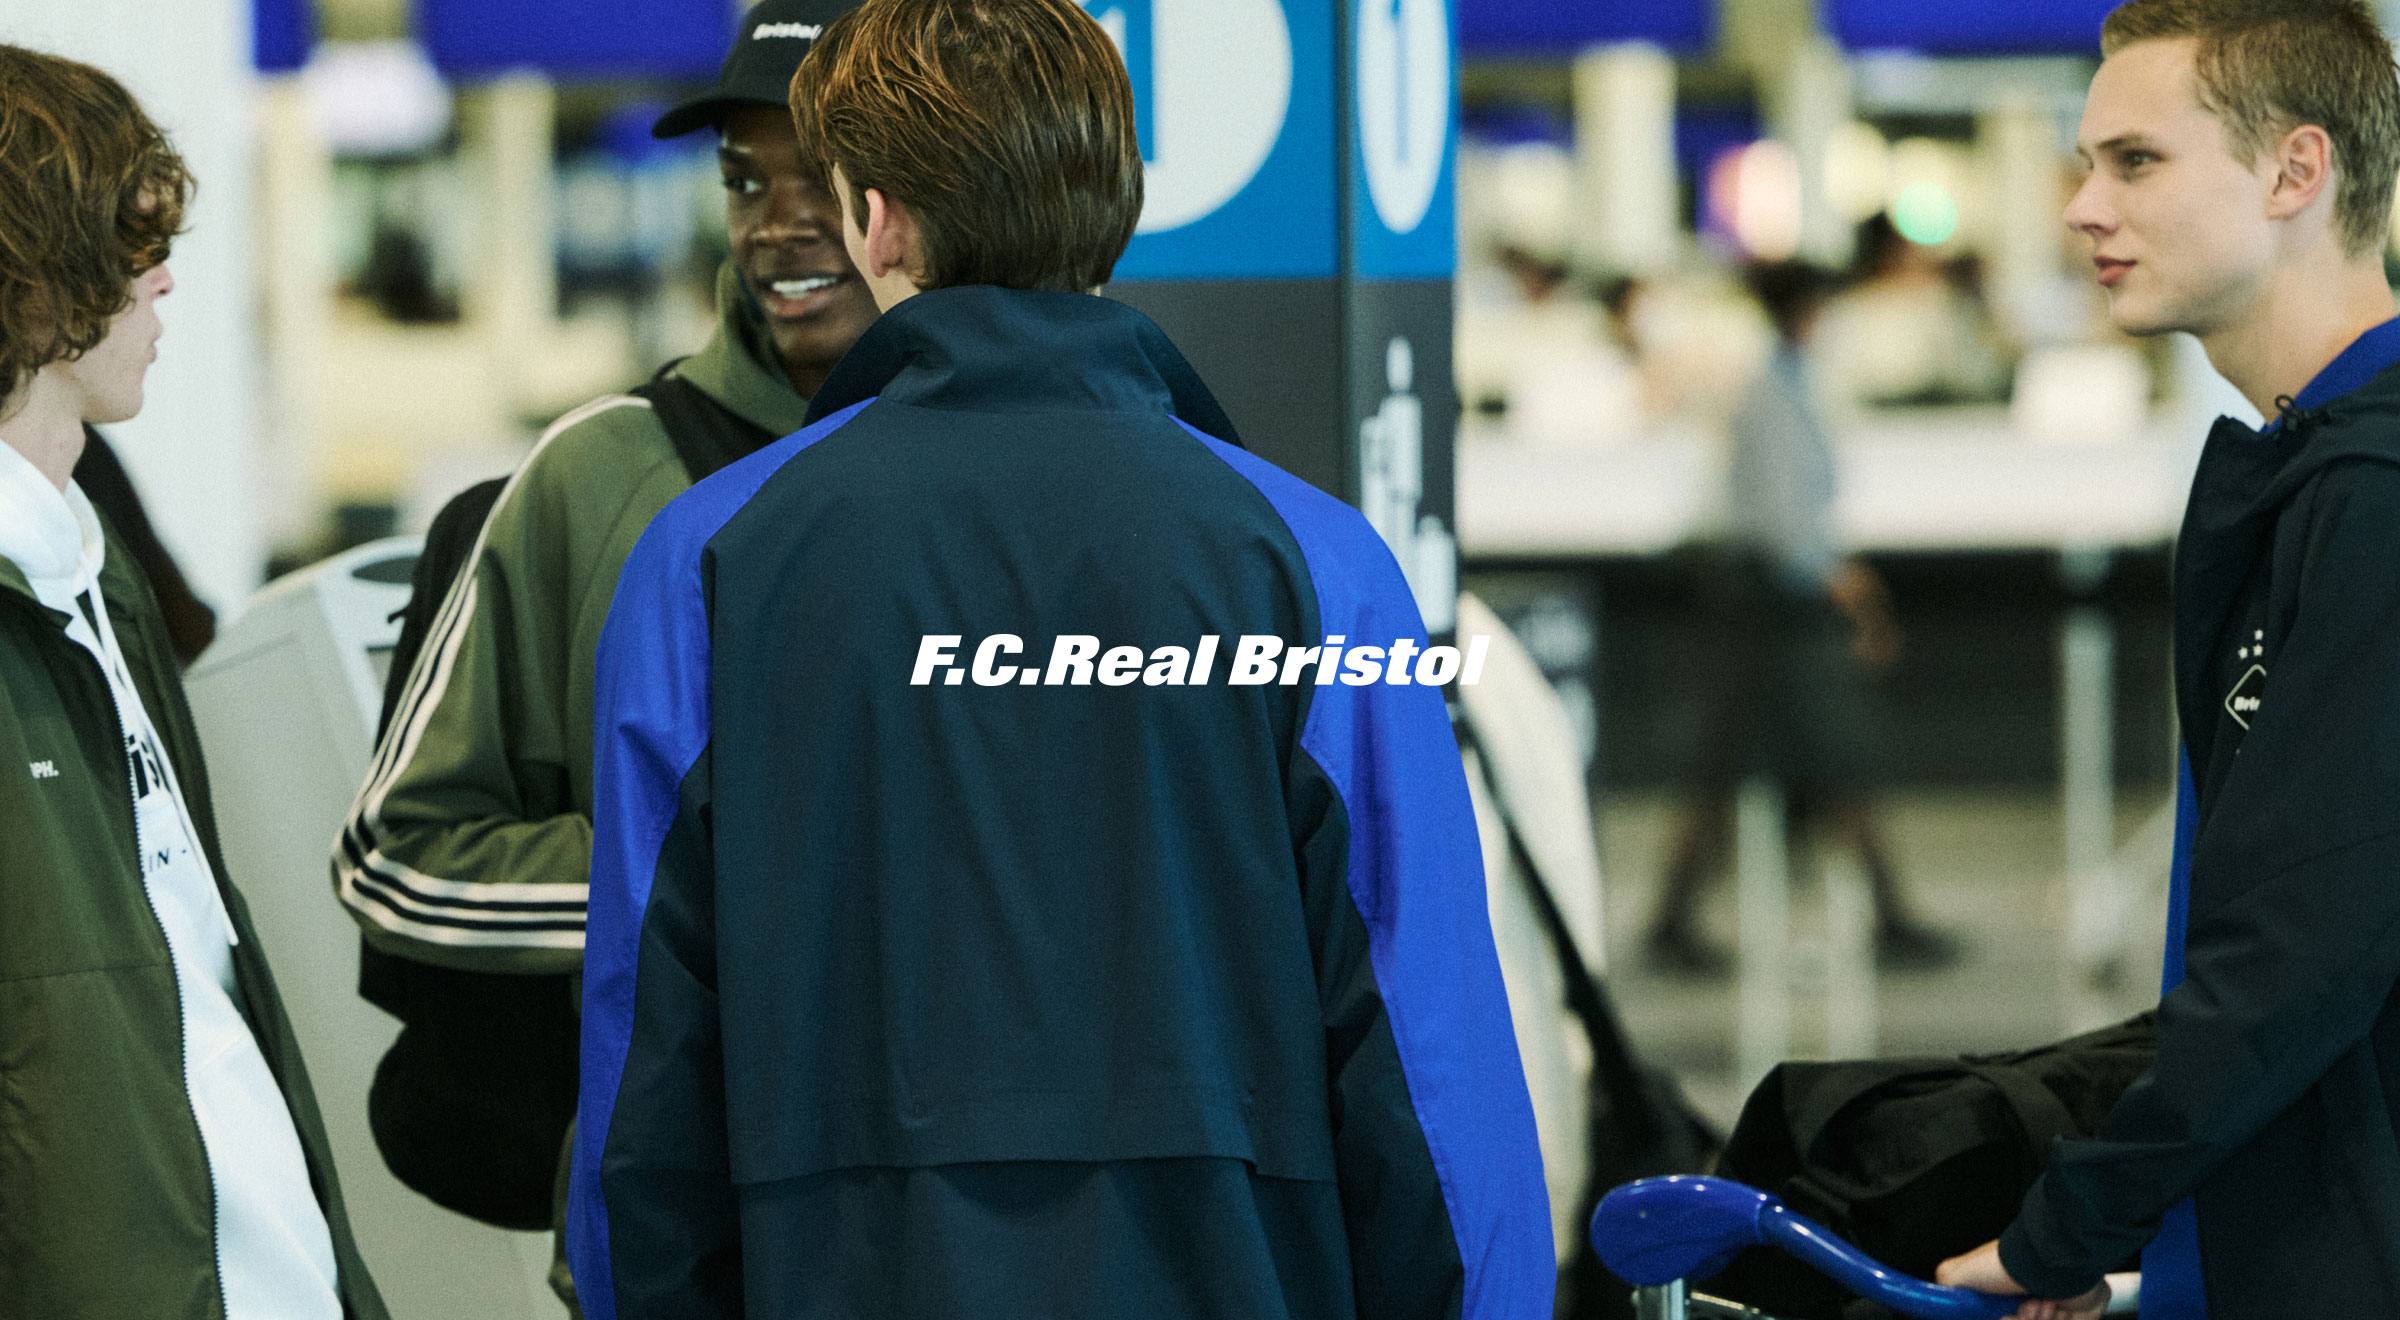 F.C.Real Bristol